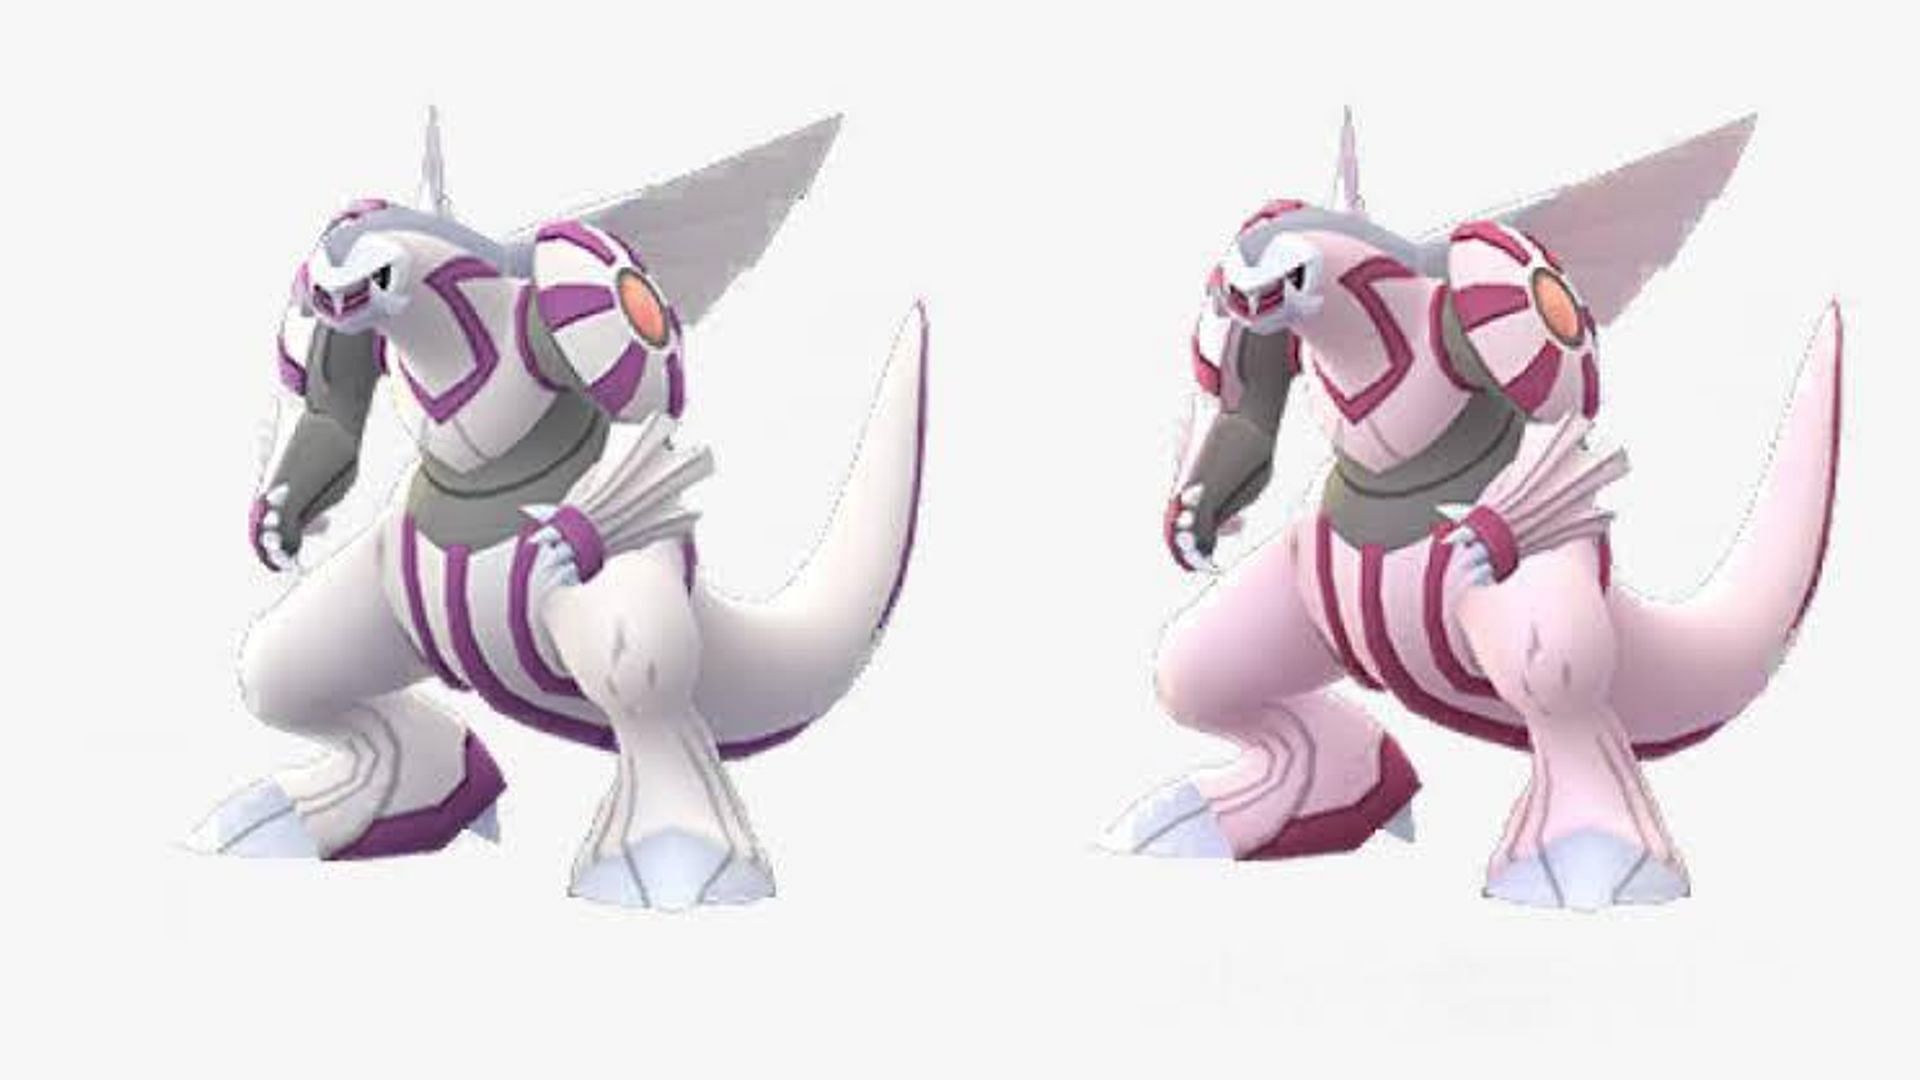 Standard Palkia (left) along side a Shiny Palkia (right) for comparison (Image via The Pokemon Company)